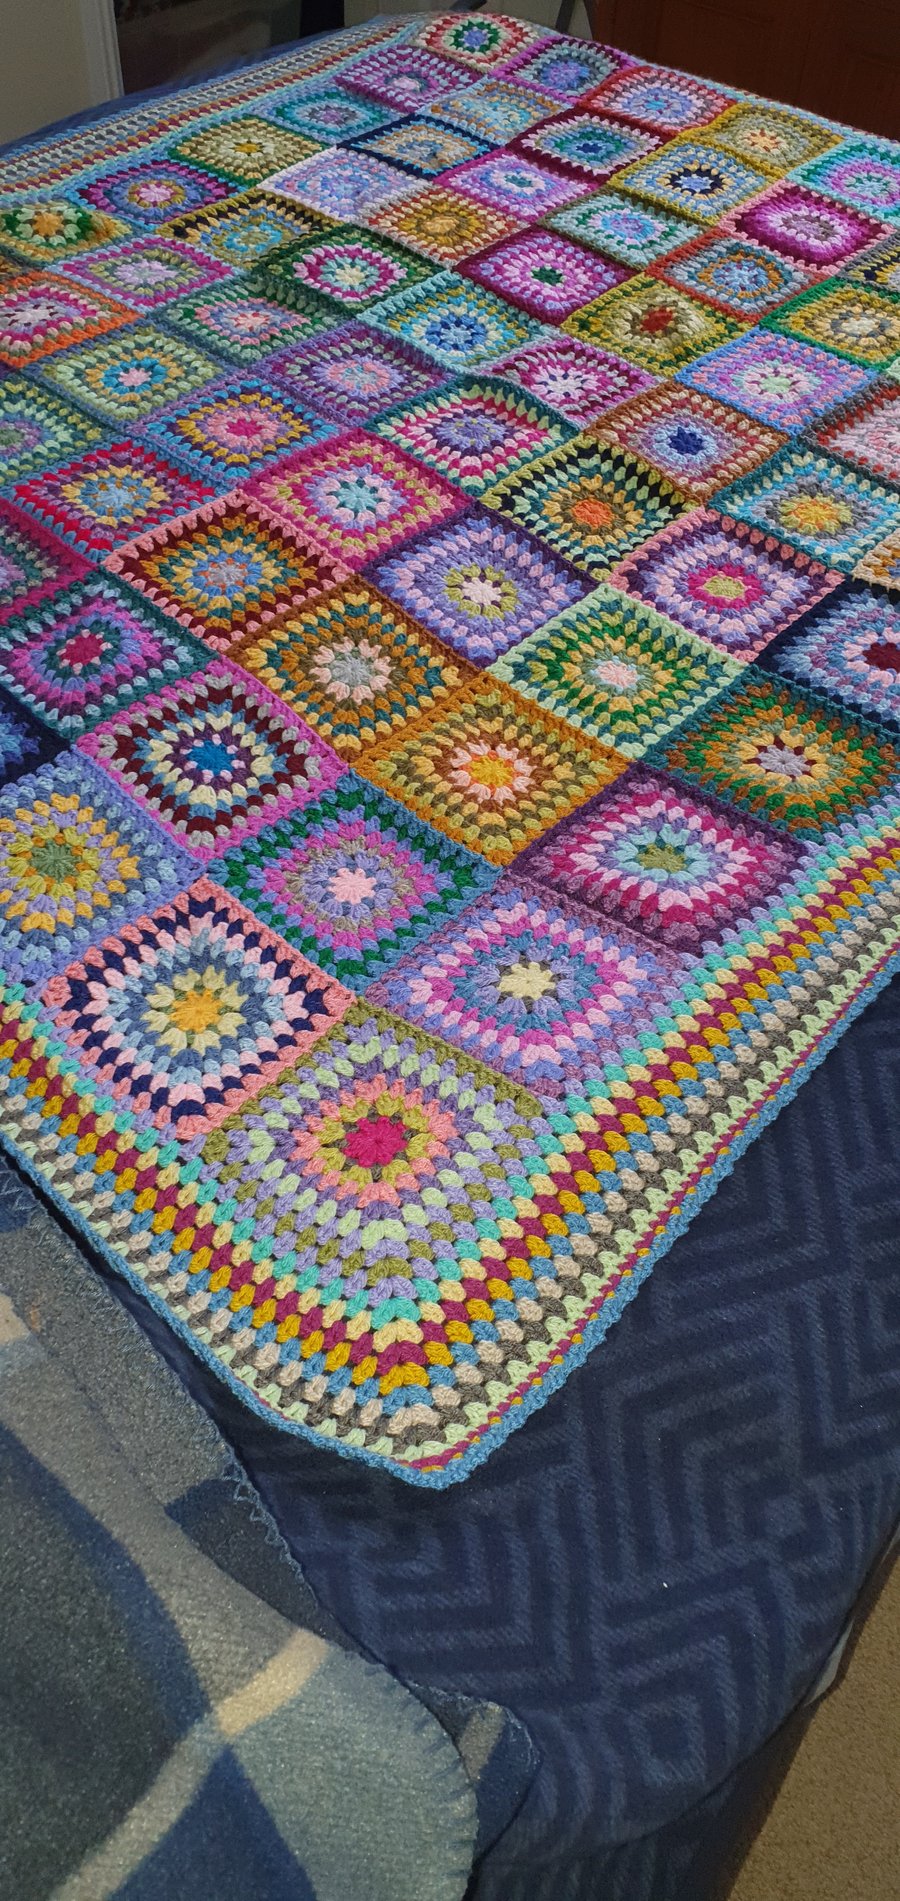 Hand Crocheted retro style Granny square blanket